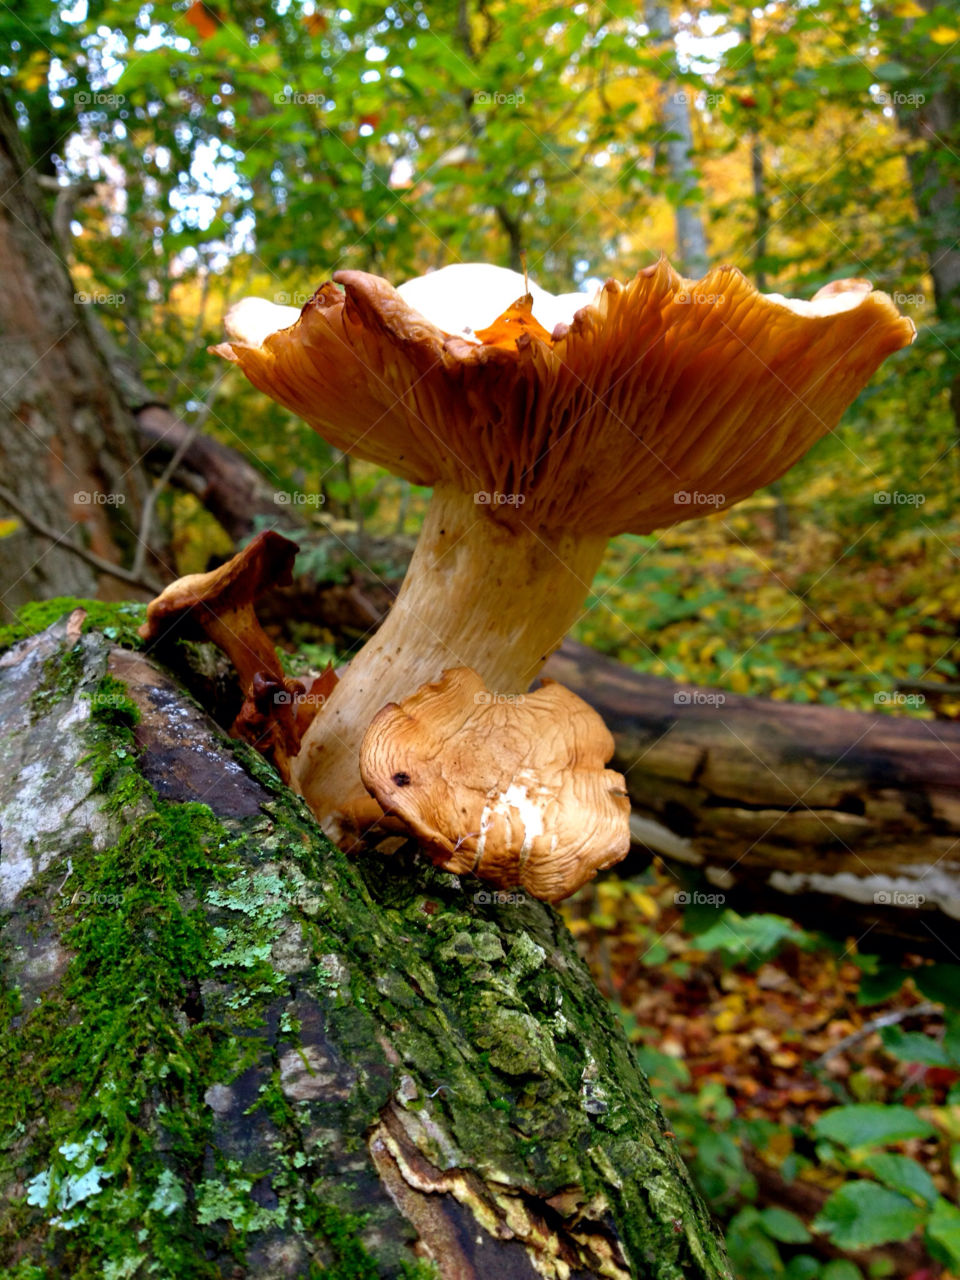 fall mushroom mission5 by asa1212